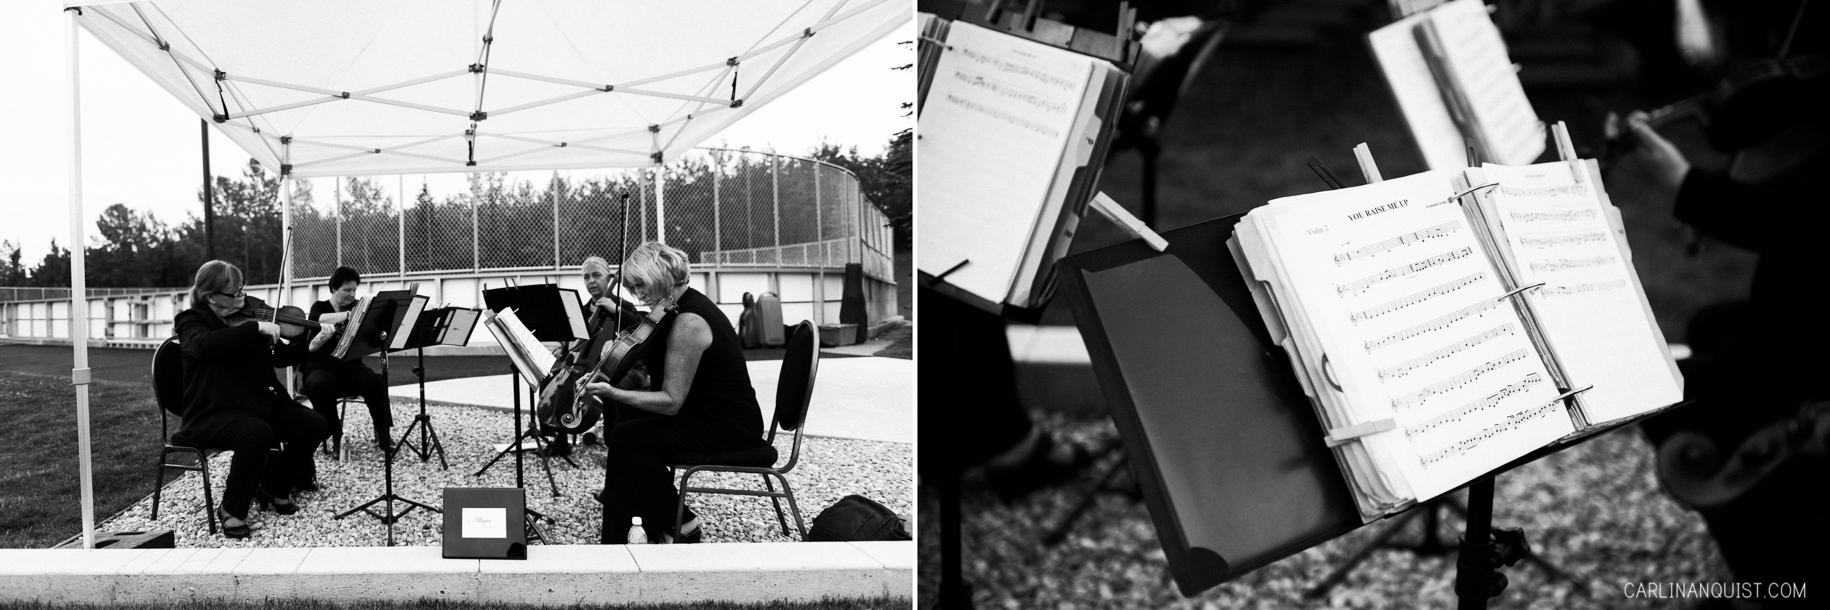 Algera Wedding Music | Calgary Wedding Photographer